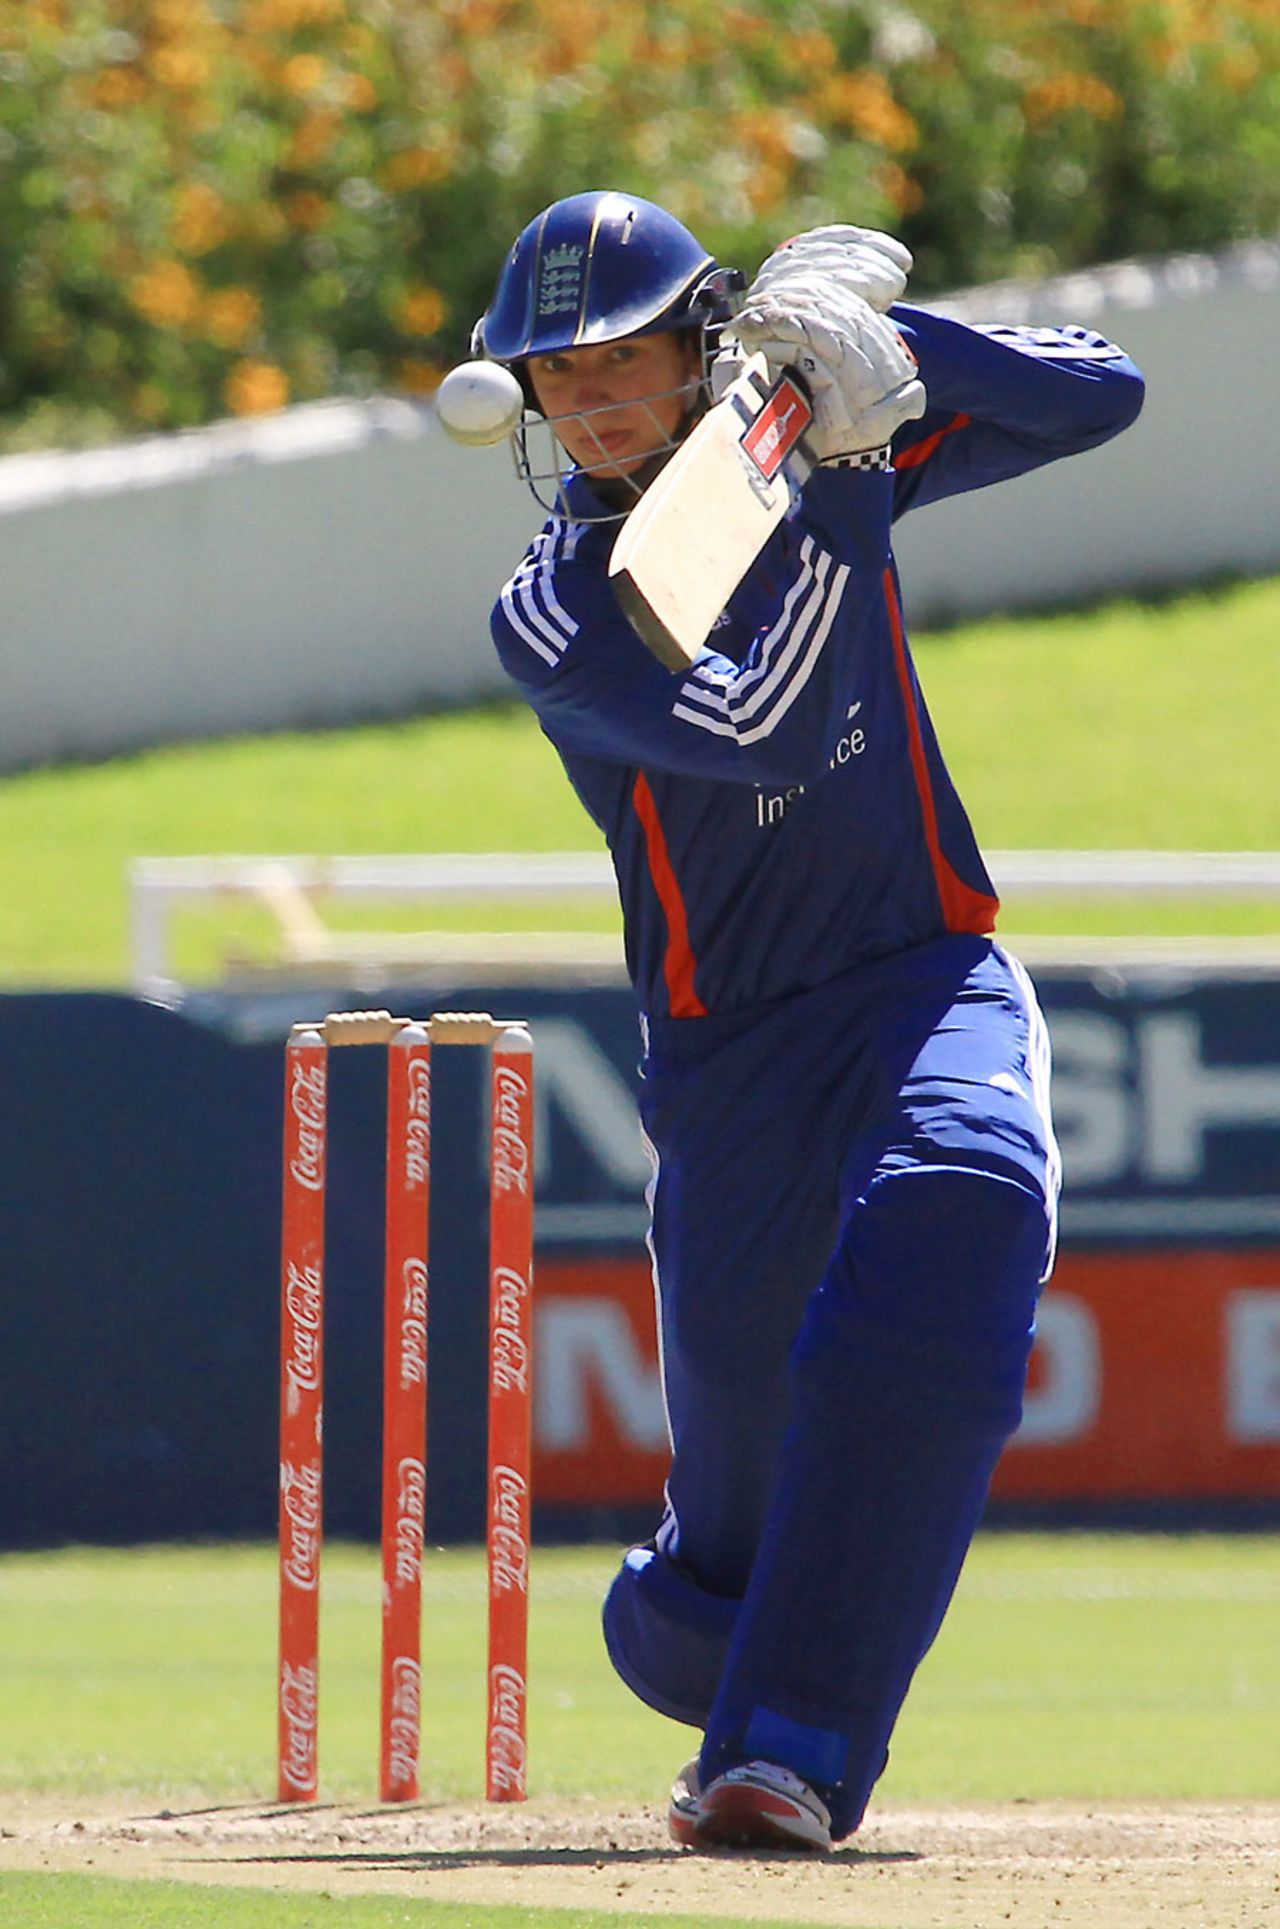 Ed Barnard scored a half-century, South Africa v England, 5th Youth ODI, Cape Town, February 21, 2013